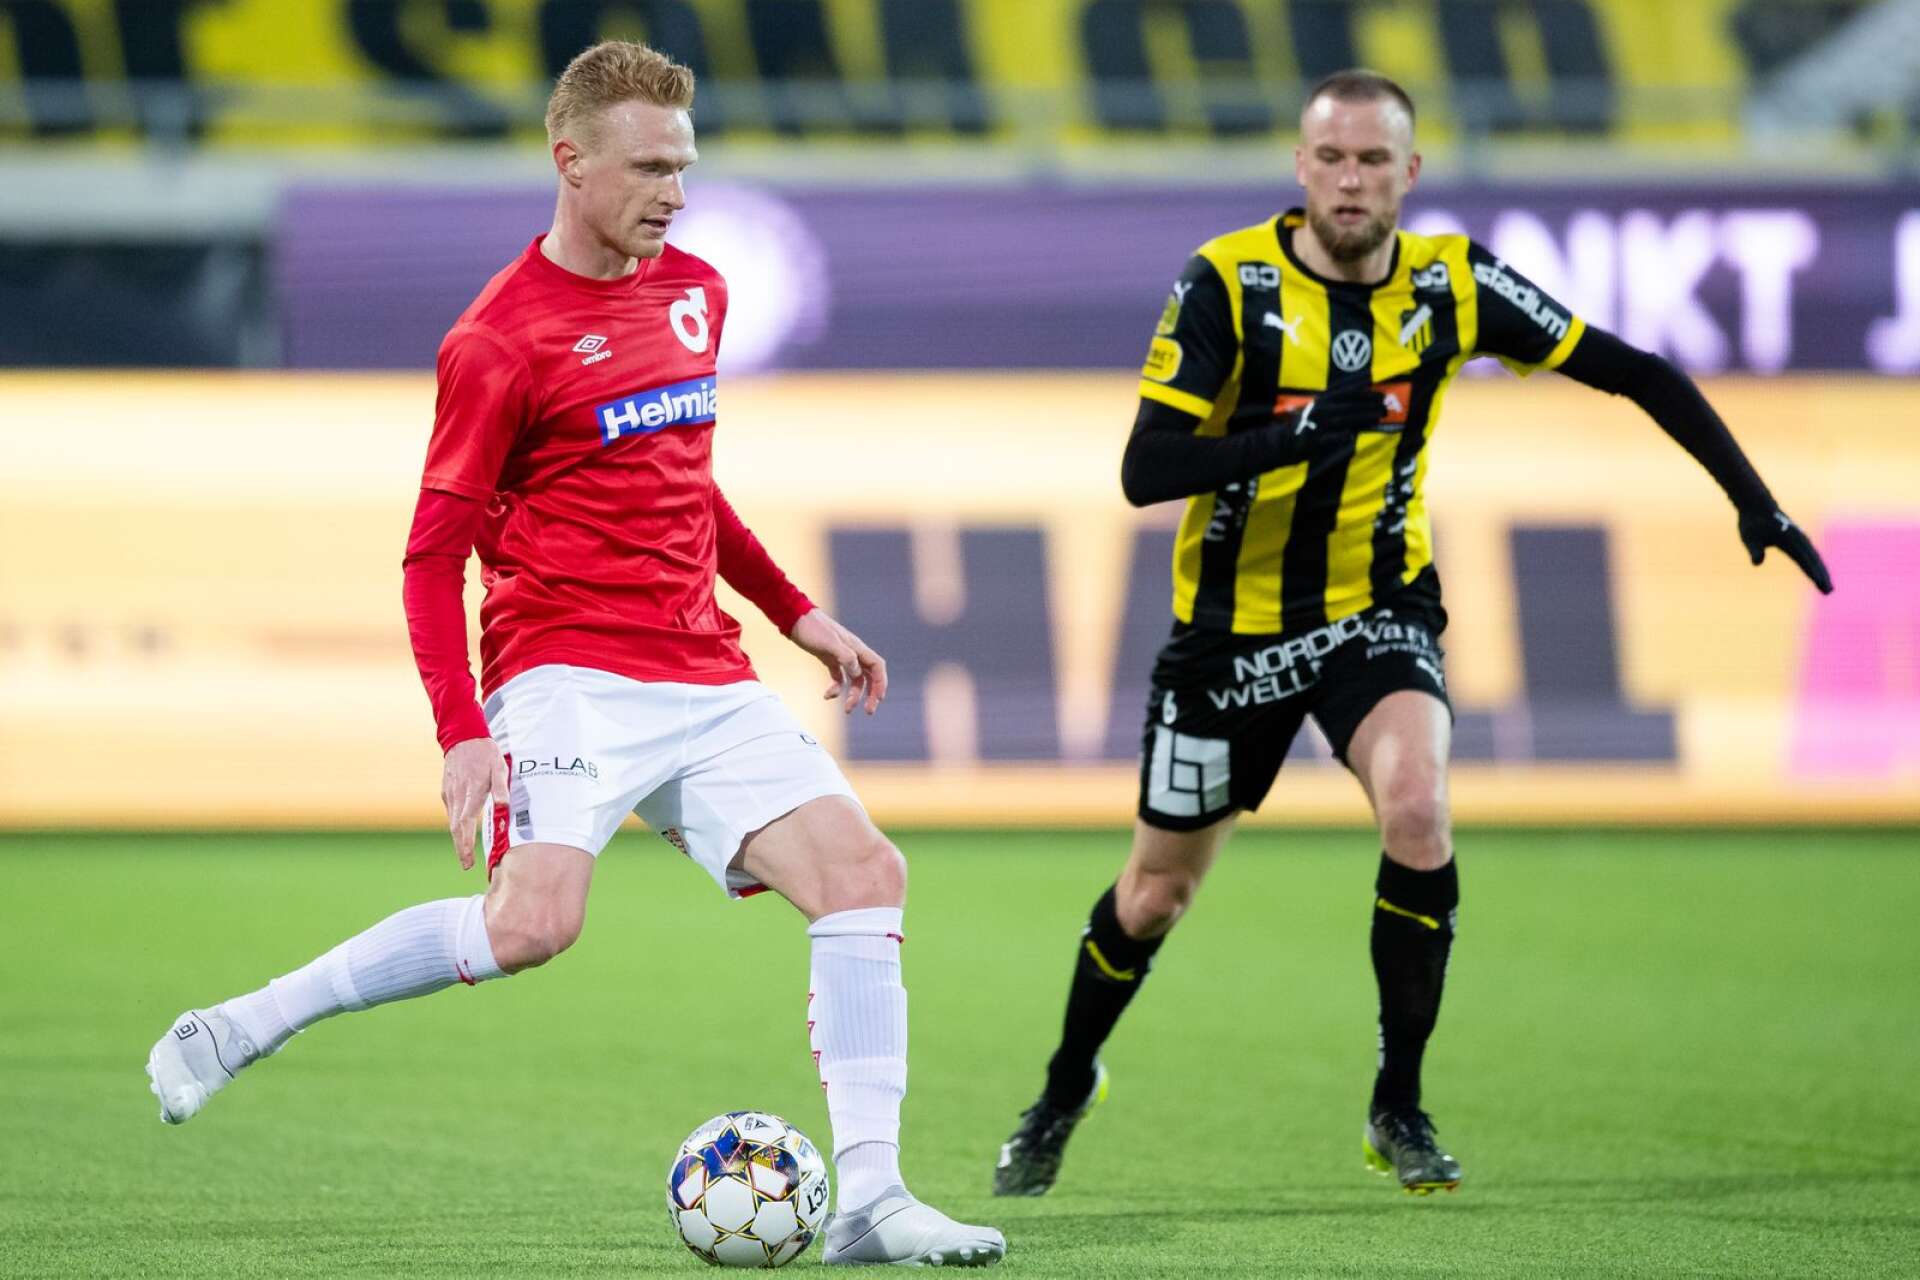 Maripuu spelade i Degerfors IF säsongen 2021.